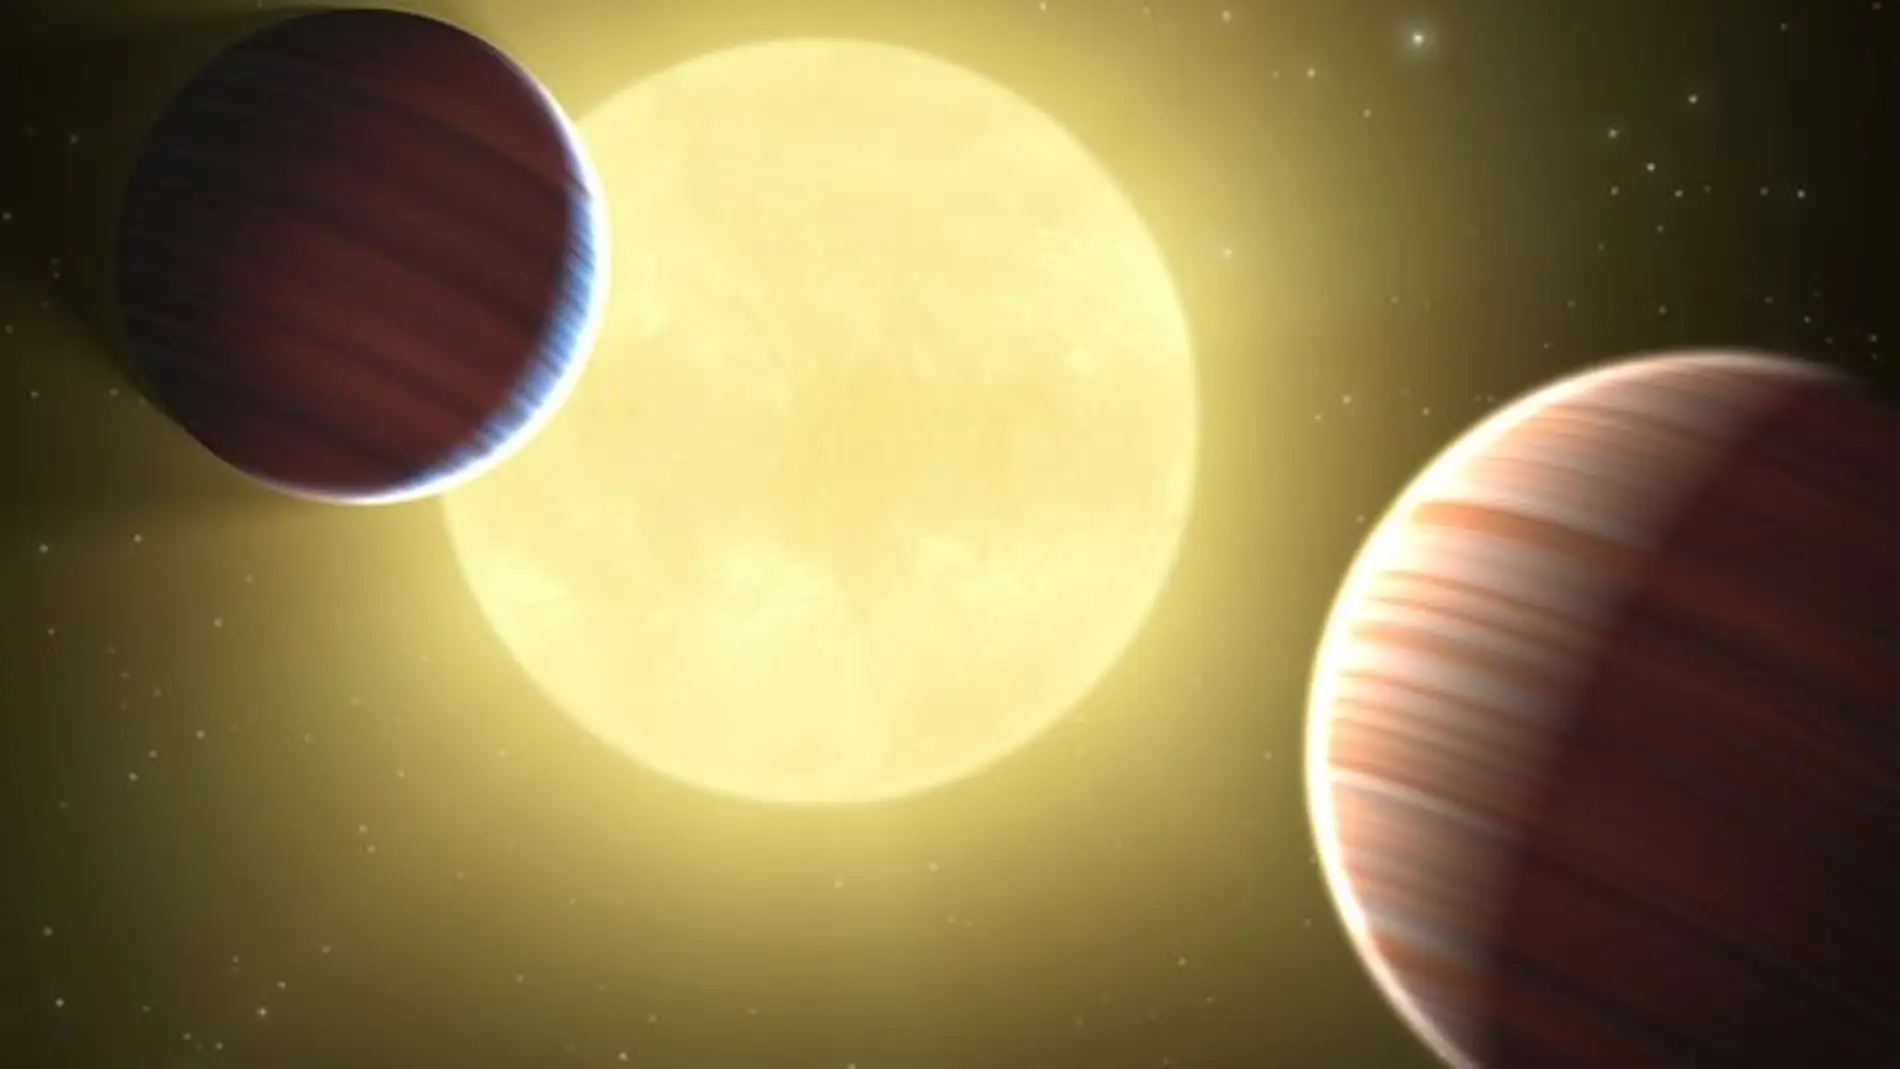 Dos planetas que orbitan alrededor de dos soles